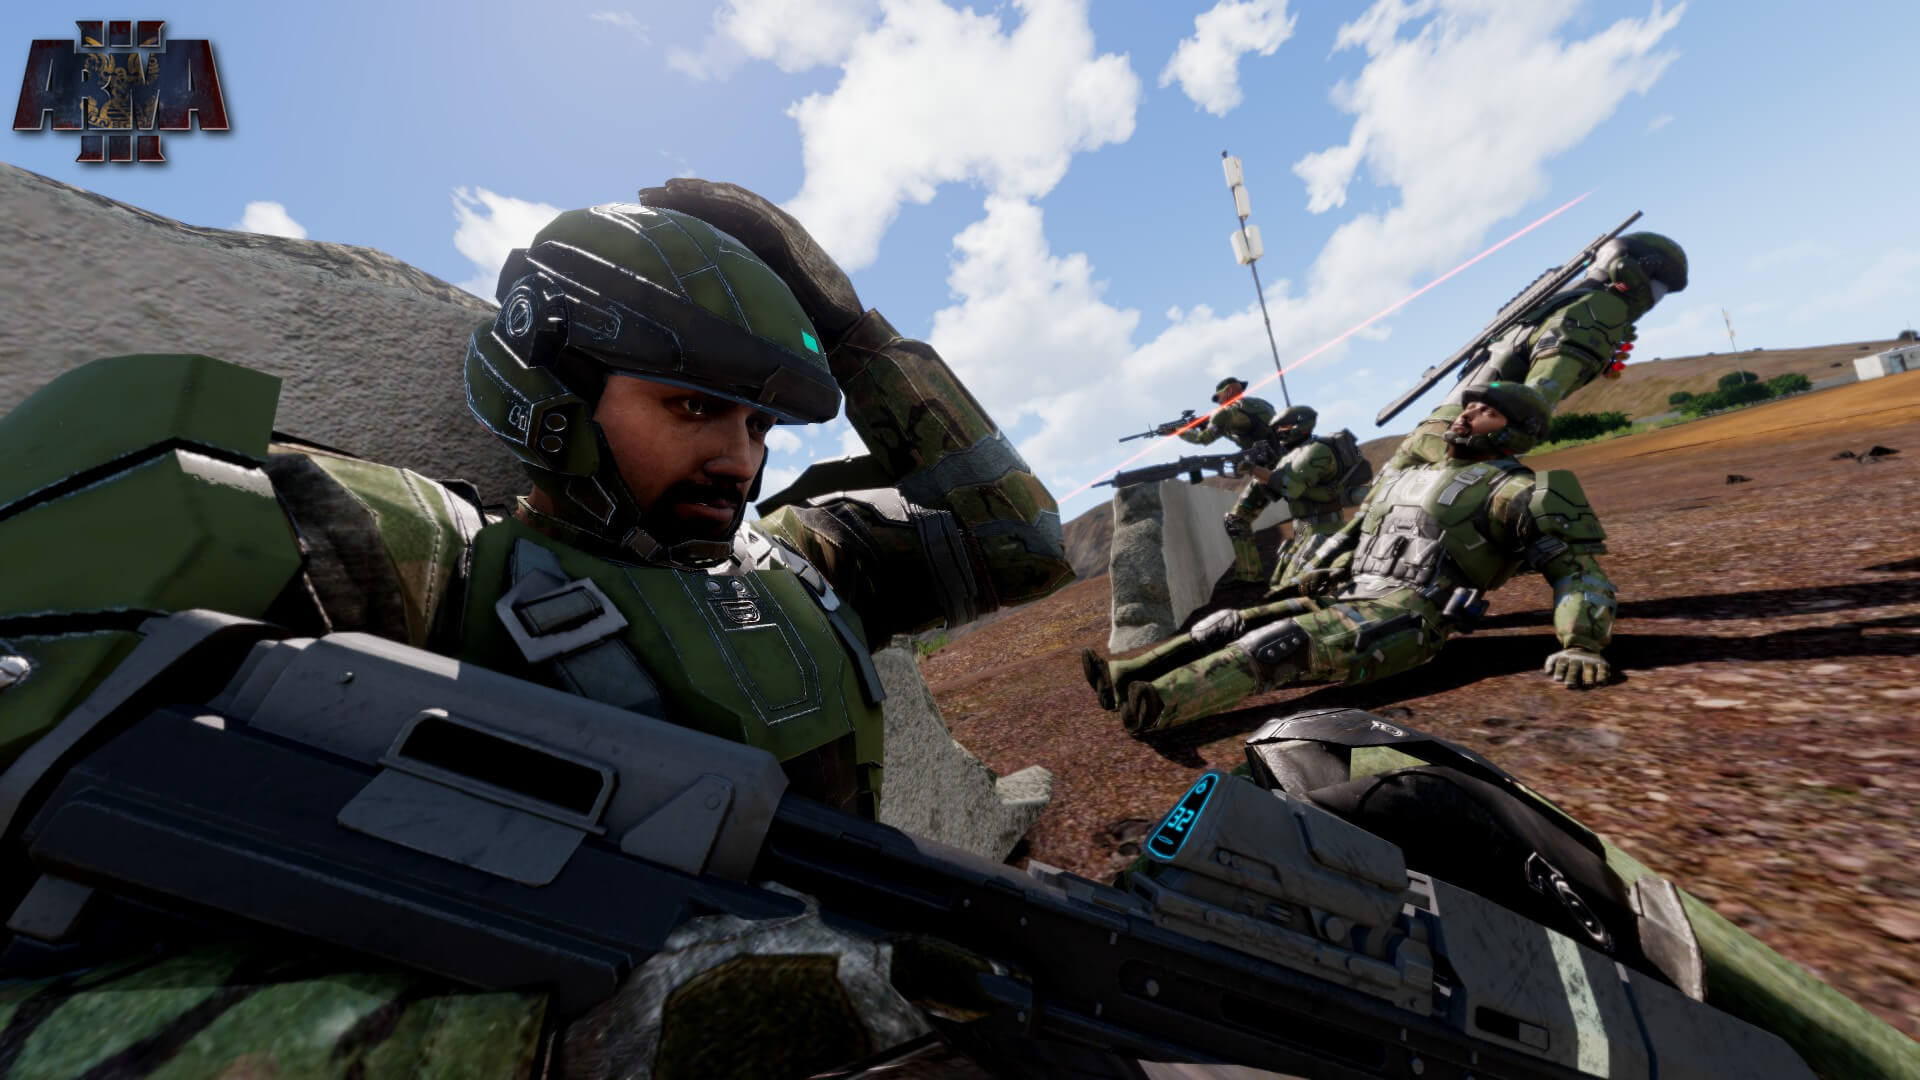 Halo comes to Arma 3 via the Operation: TREBUCHET mod, now